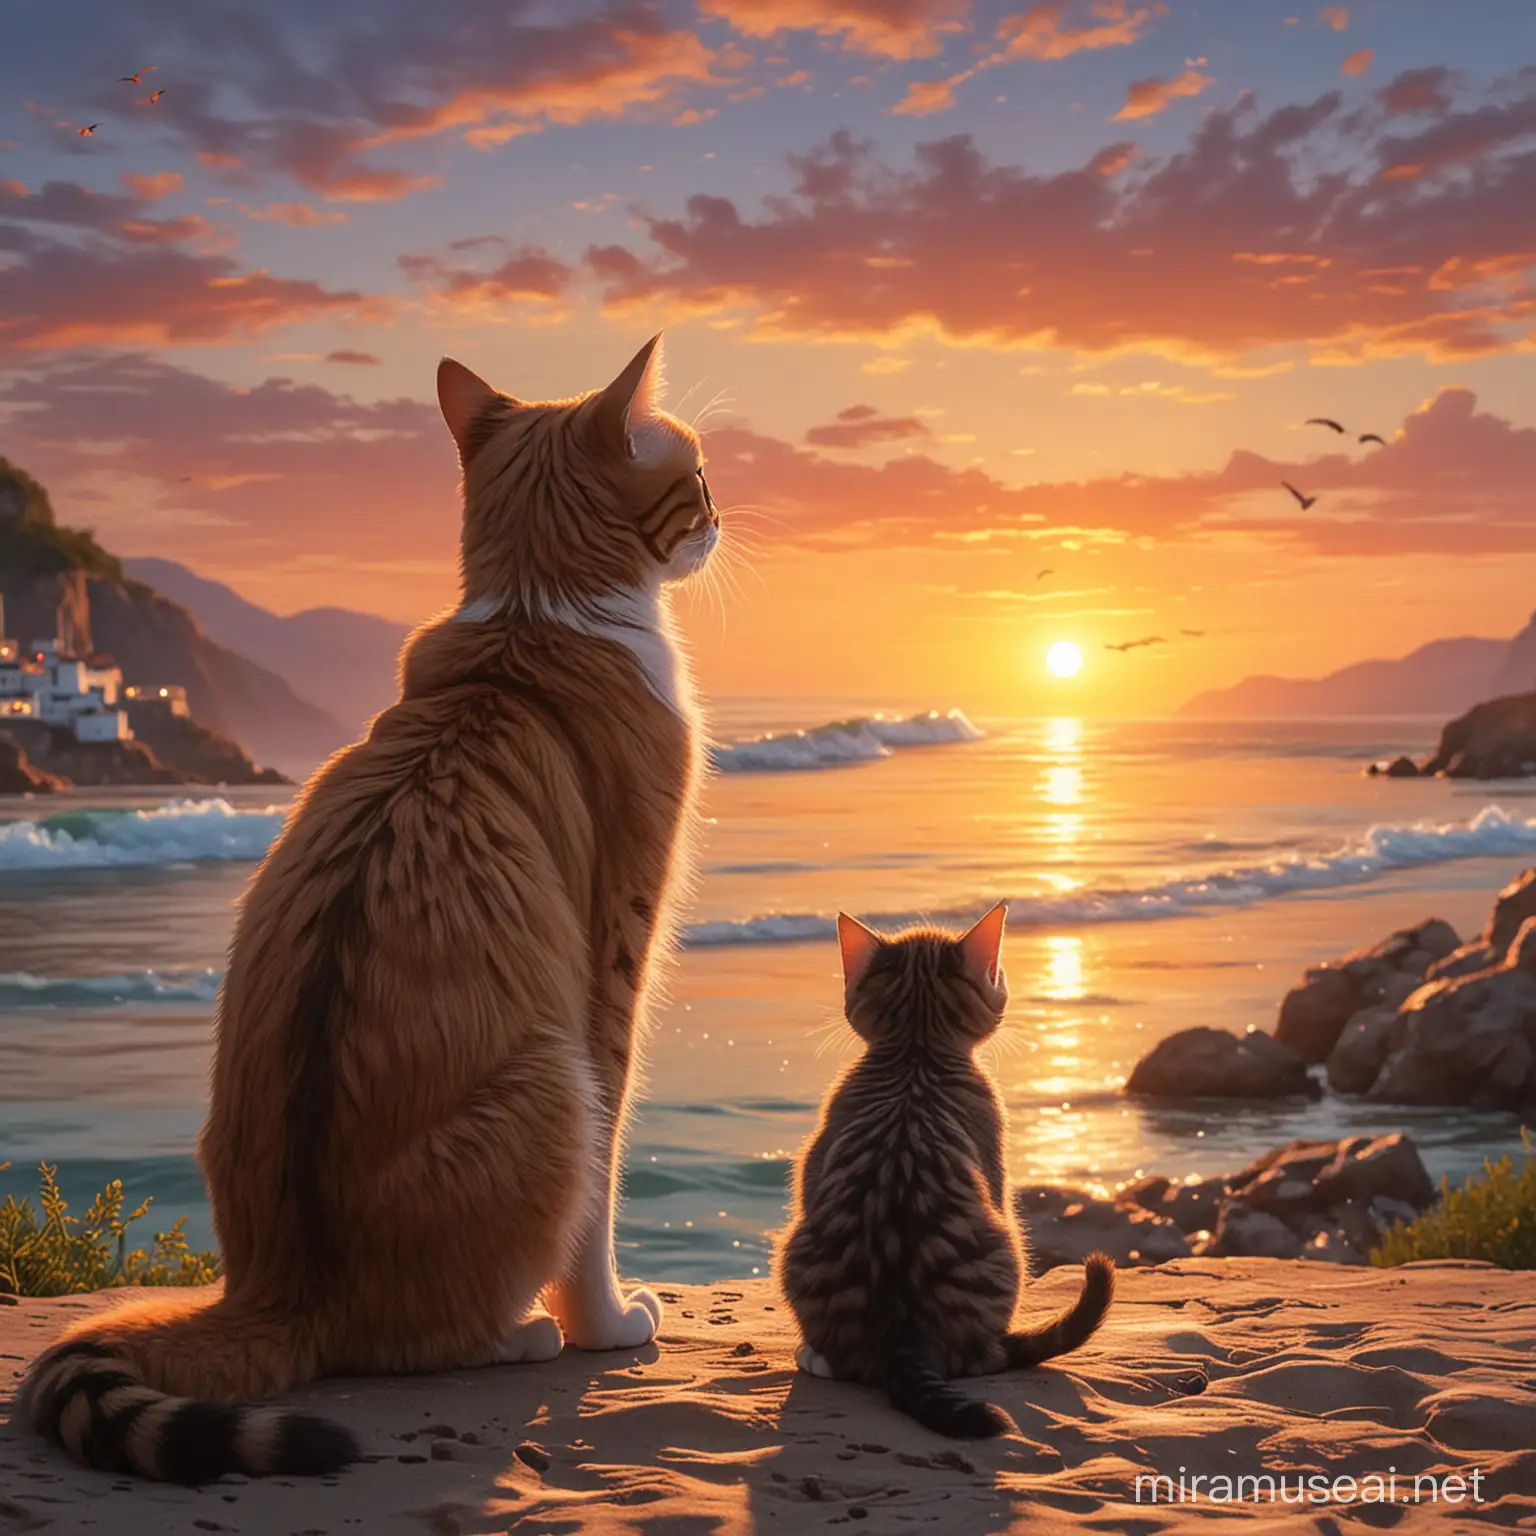 Cat and Kitten Enjoying Sunset by the Seaside